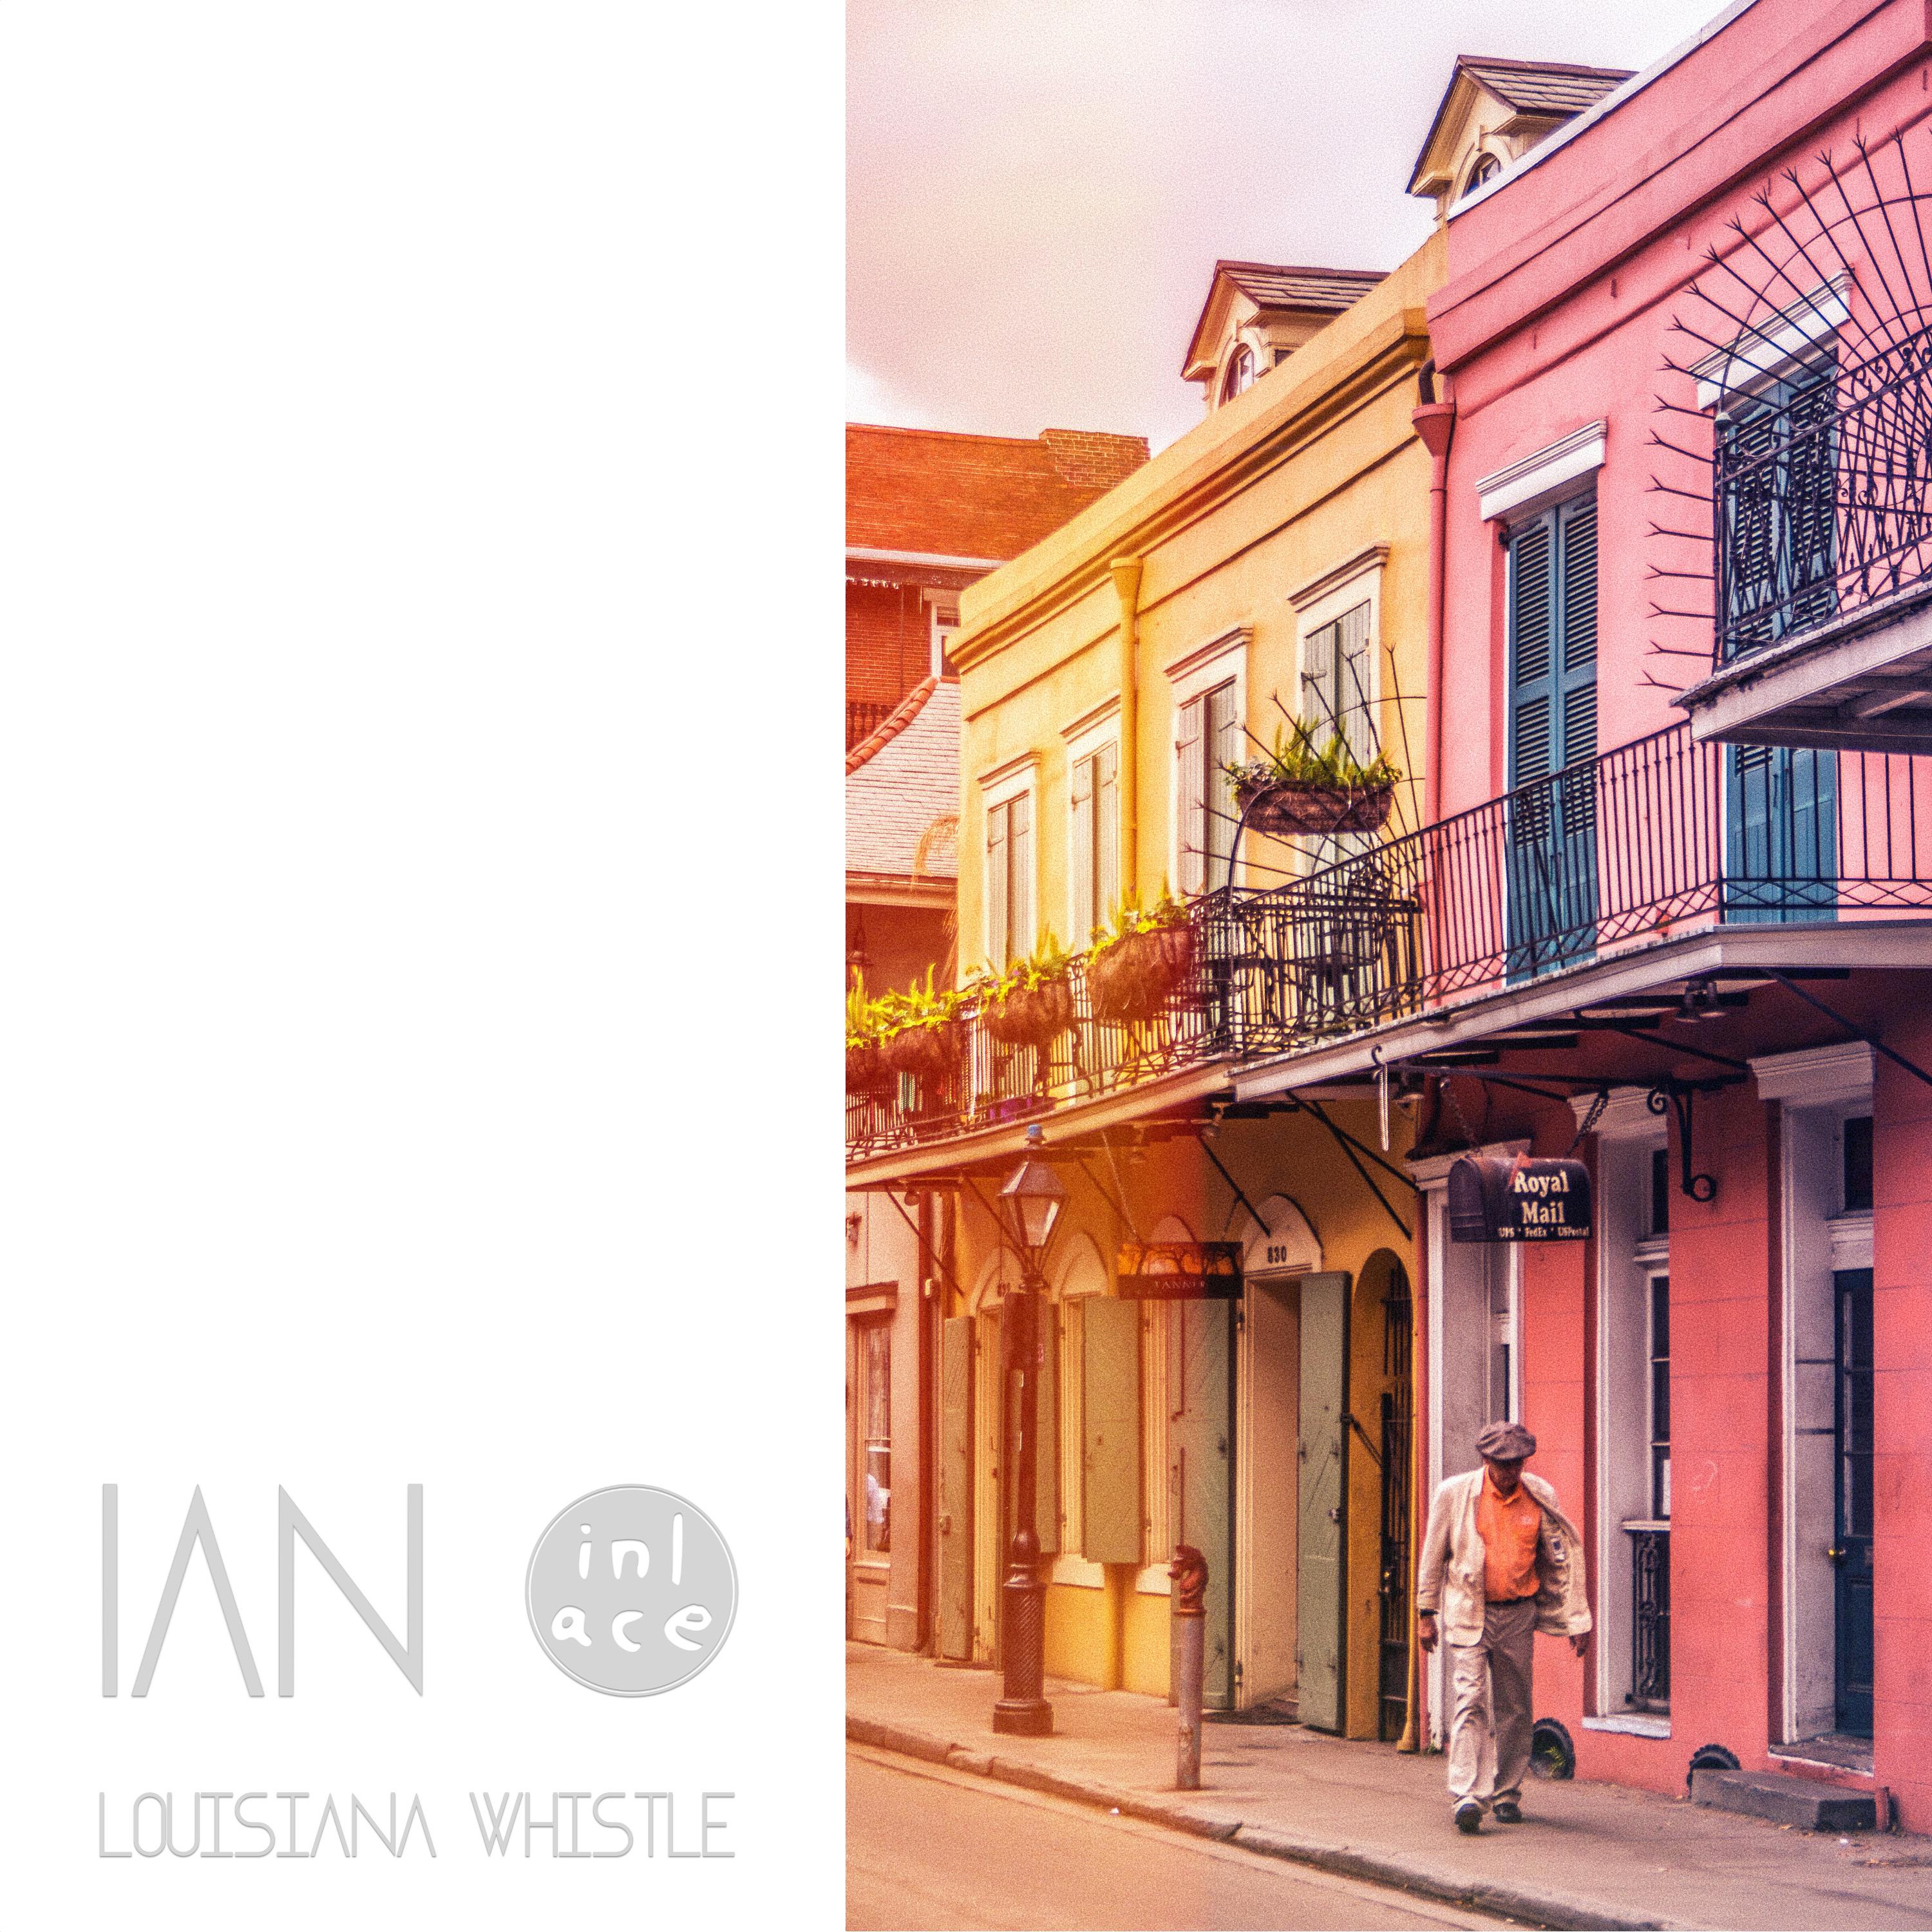 Ian - Louisiana Whistle